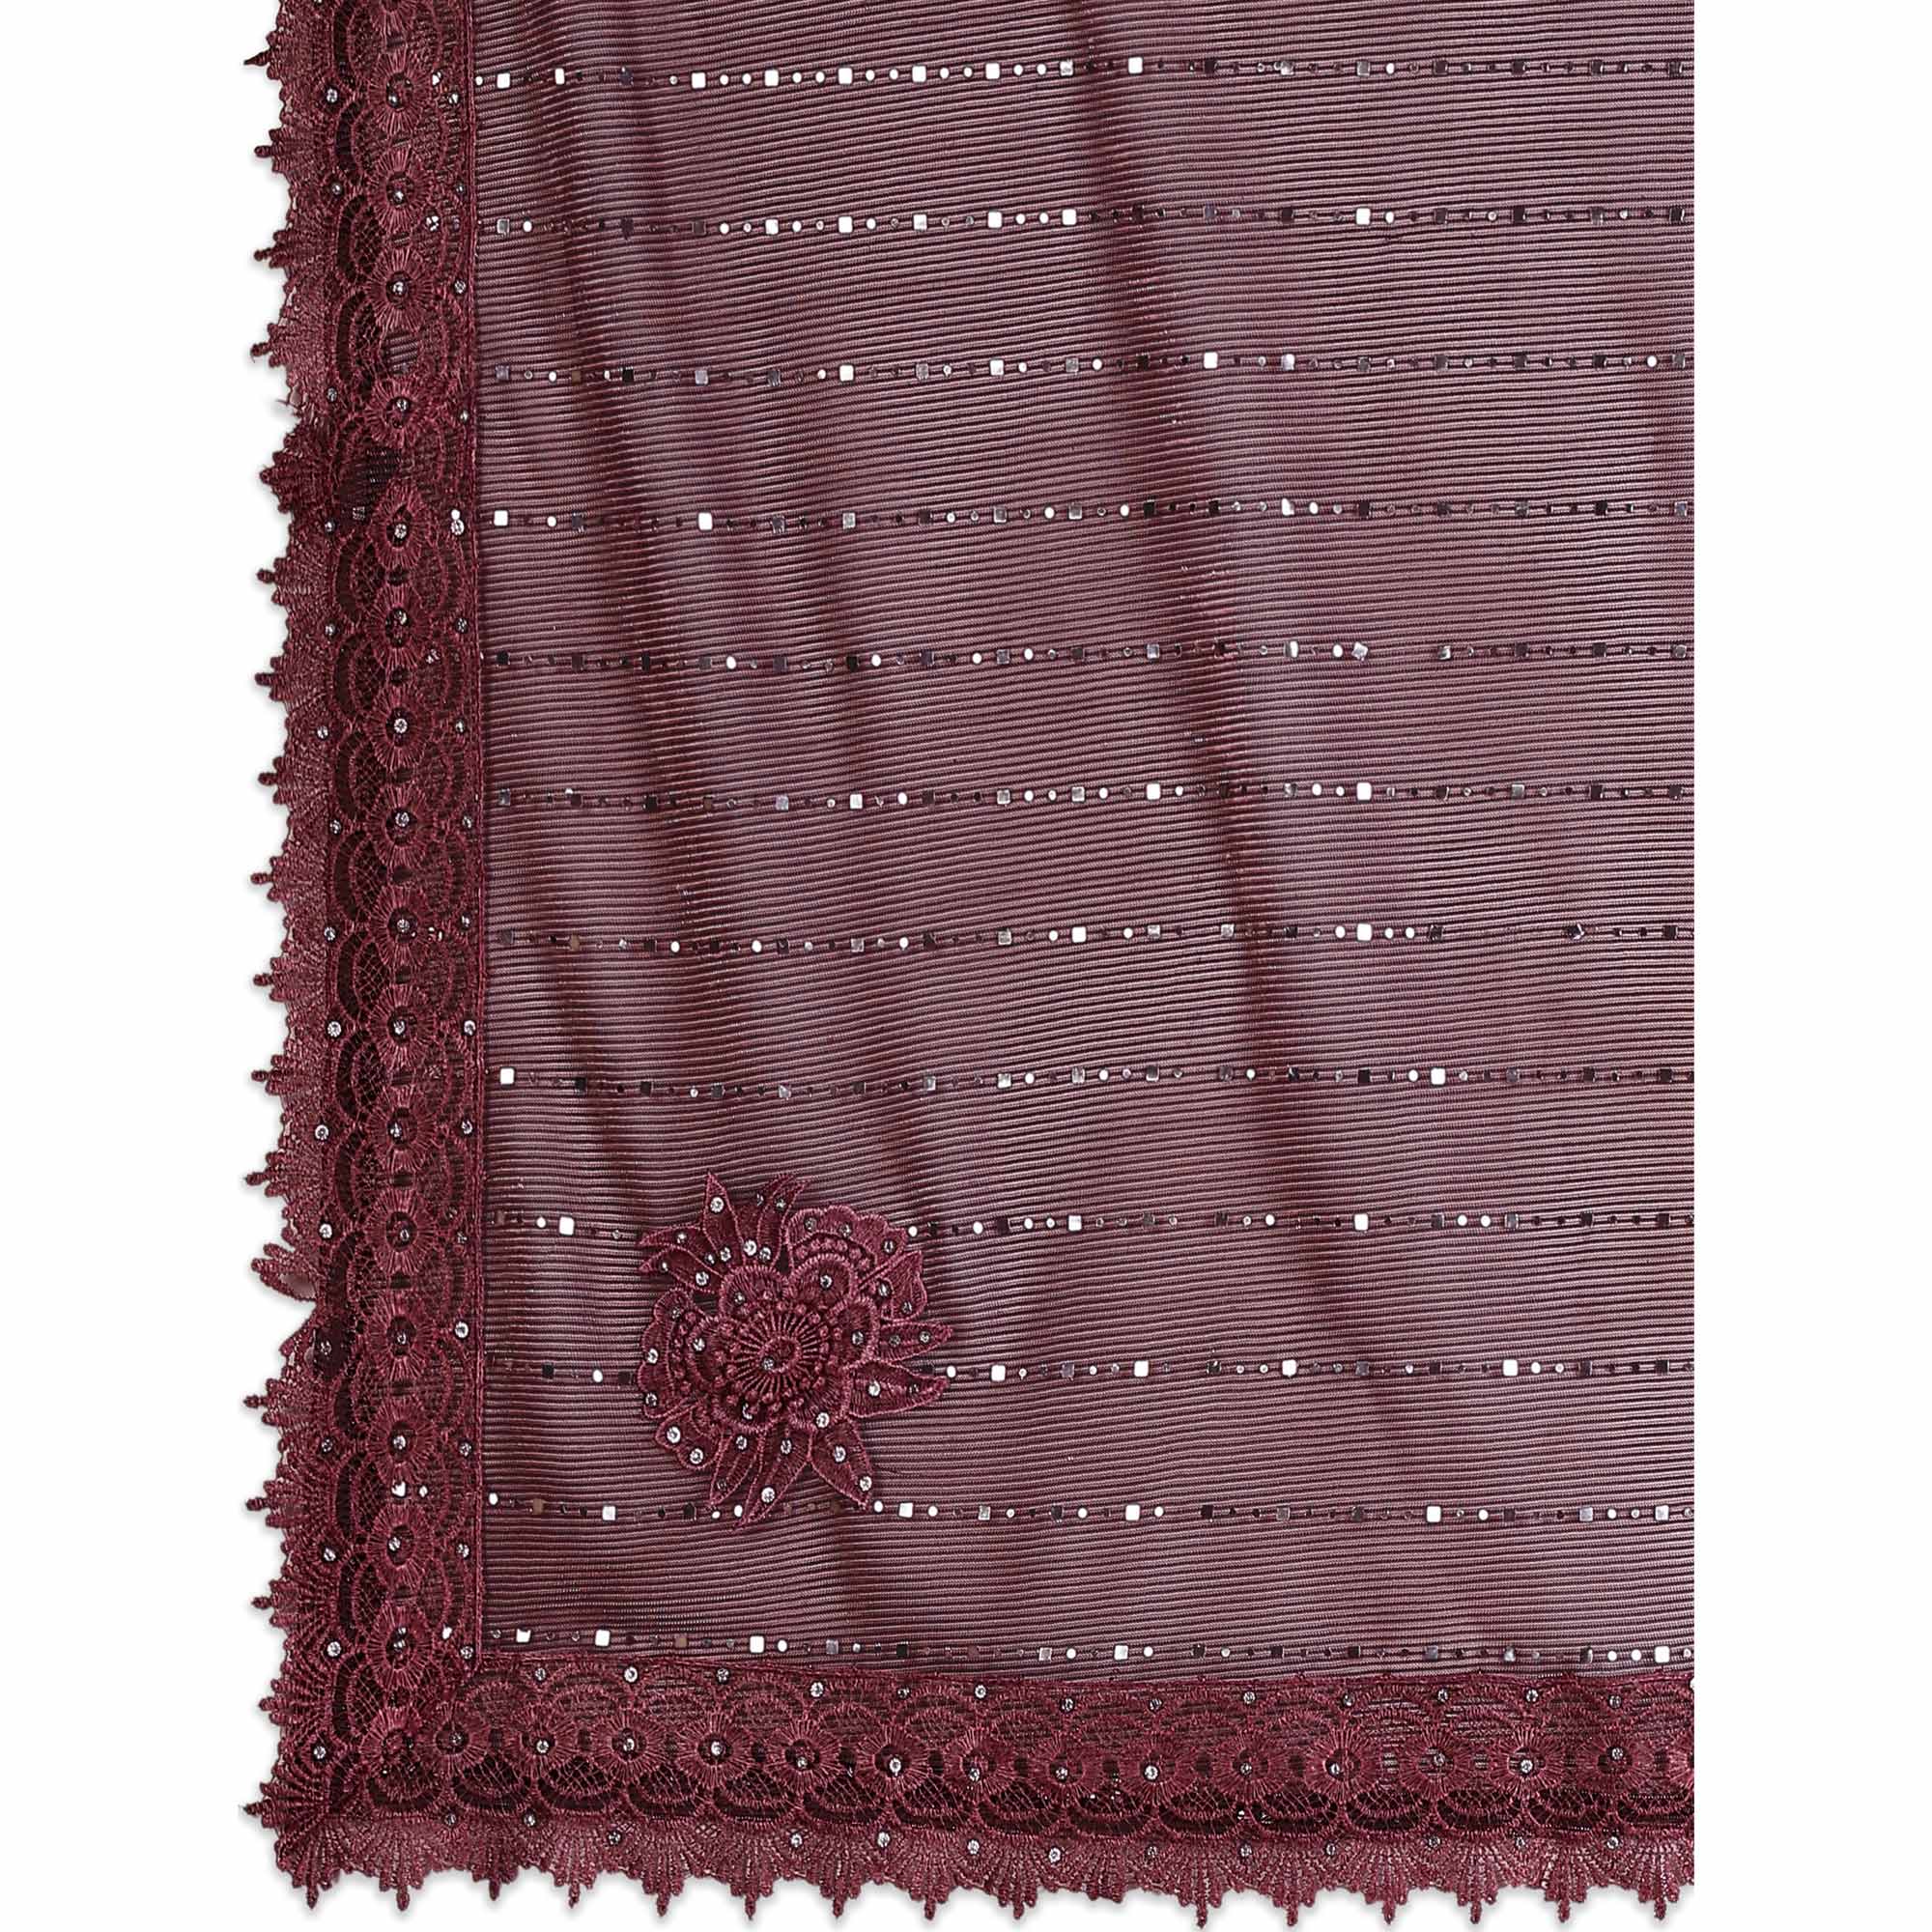 Dark Mauve Tikali Work Lycra Saree With Embroidered Lace Border